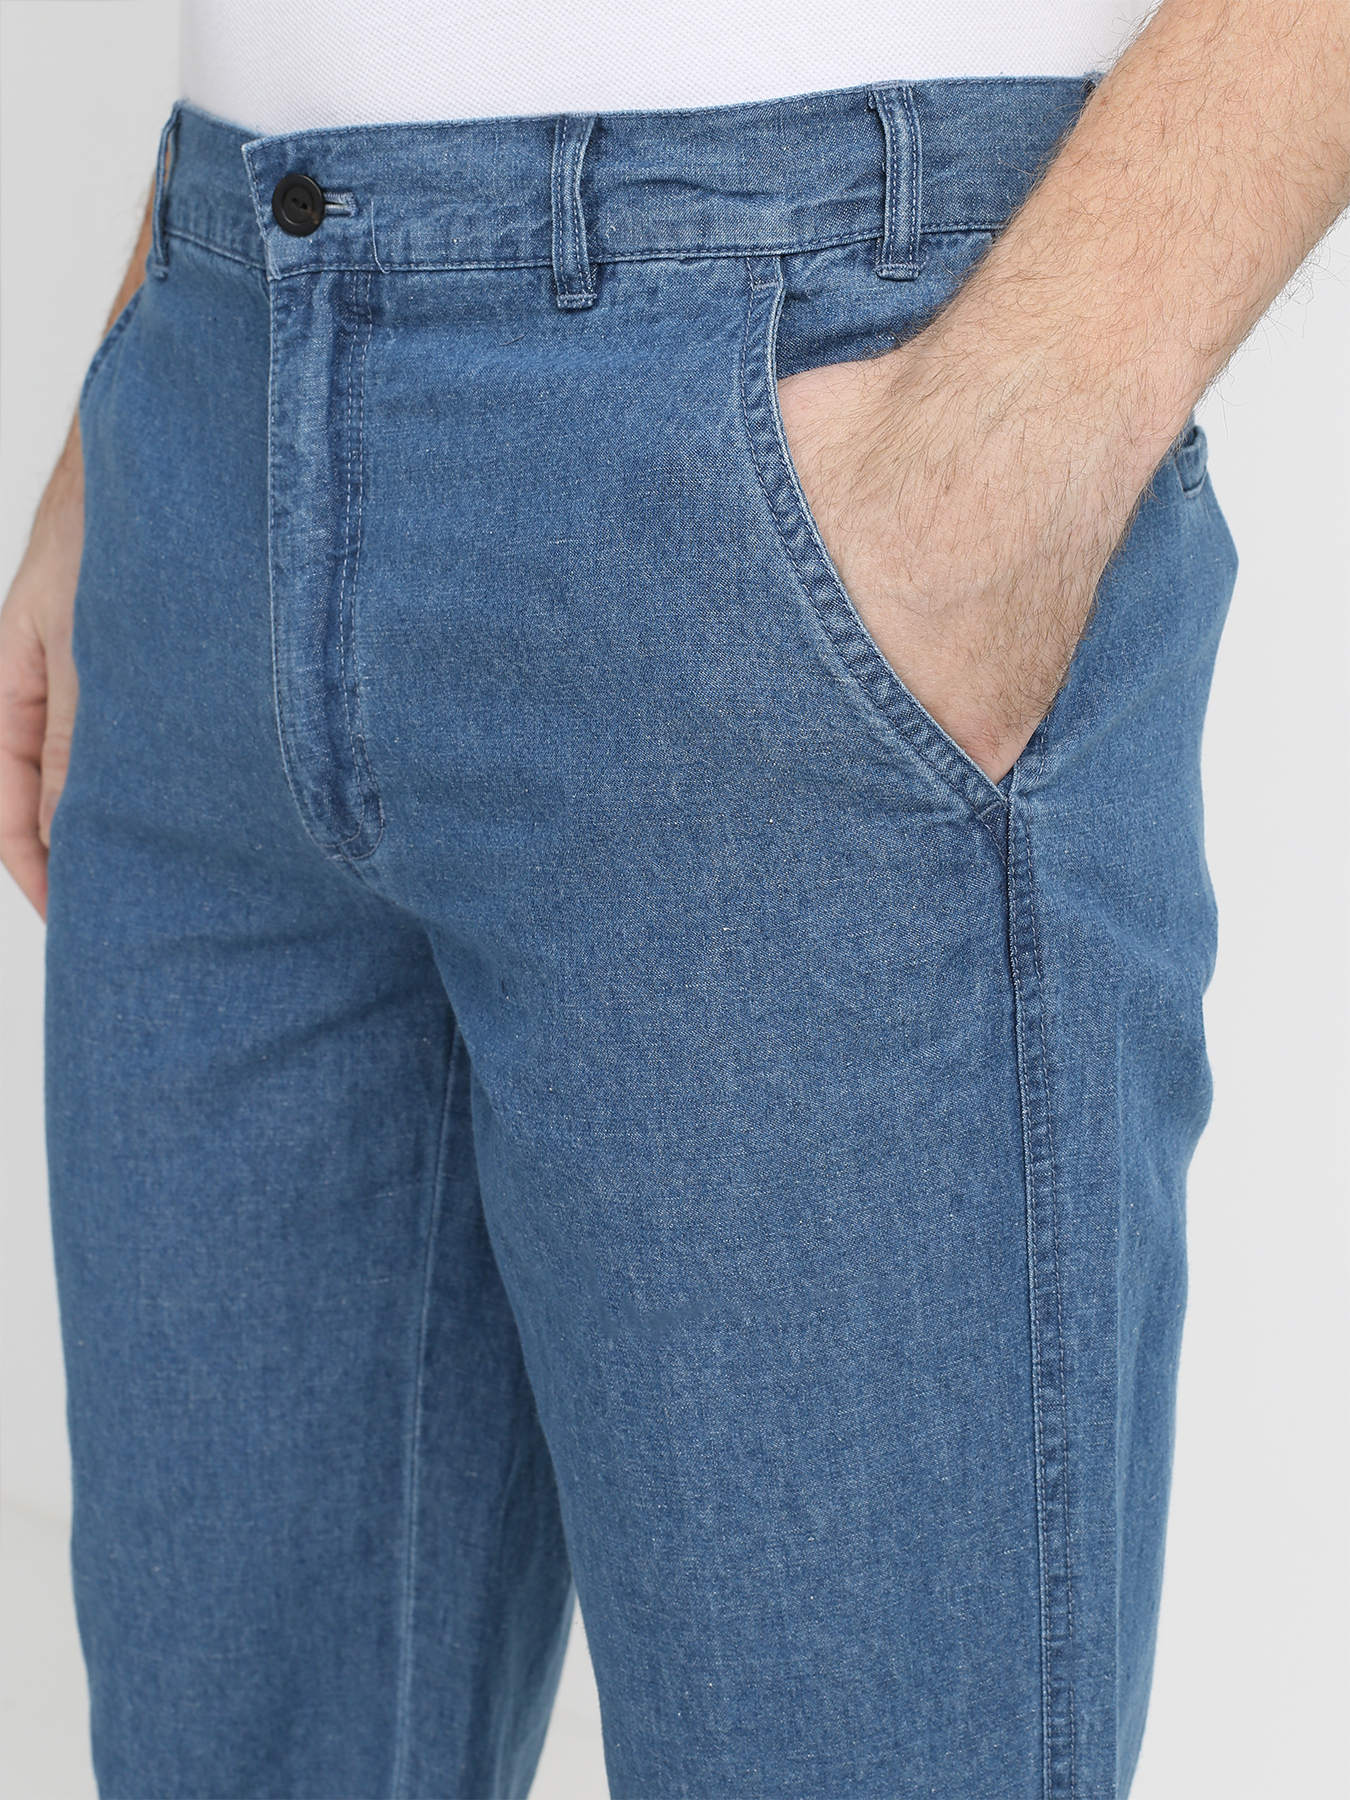 Alessandro Manzoni Jeans Прямые джинсы 330858-025 Фото 3